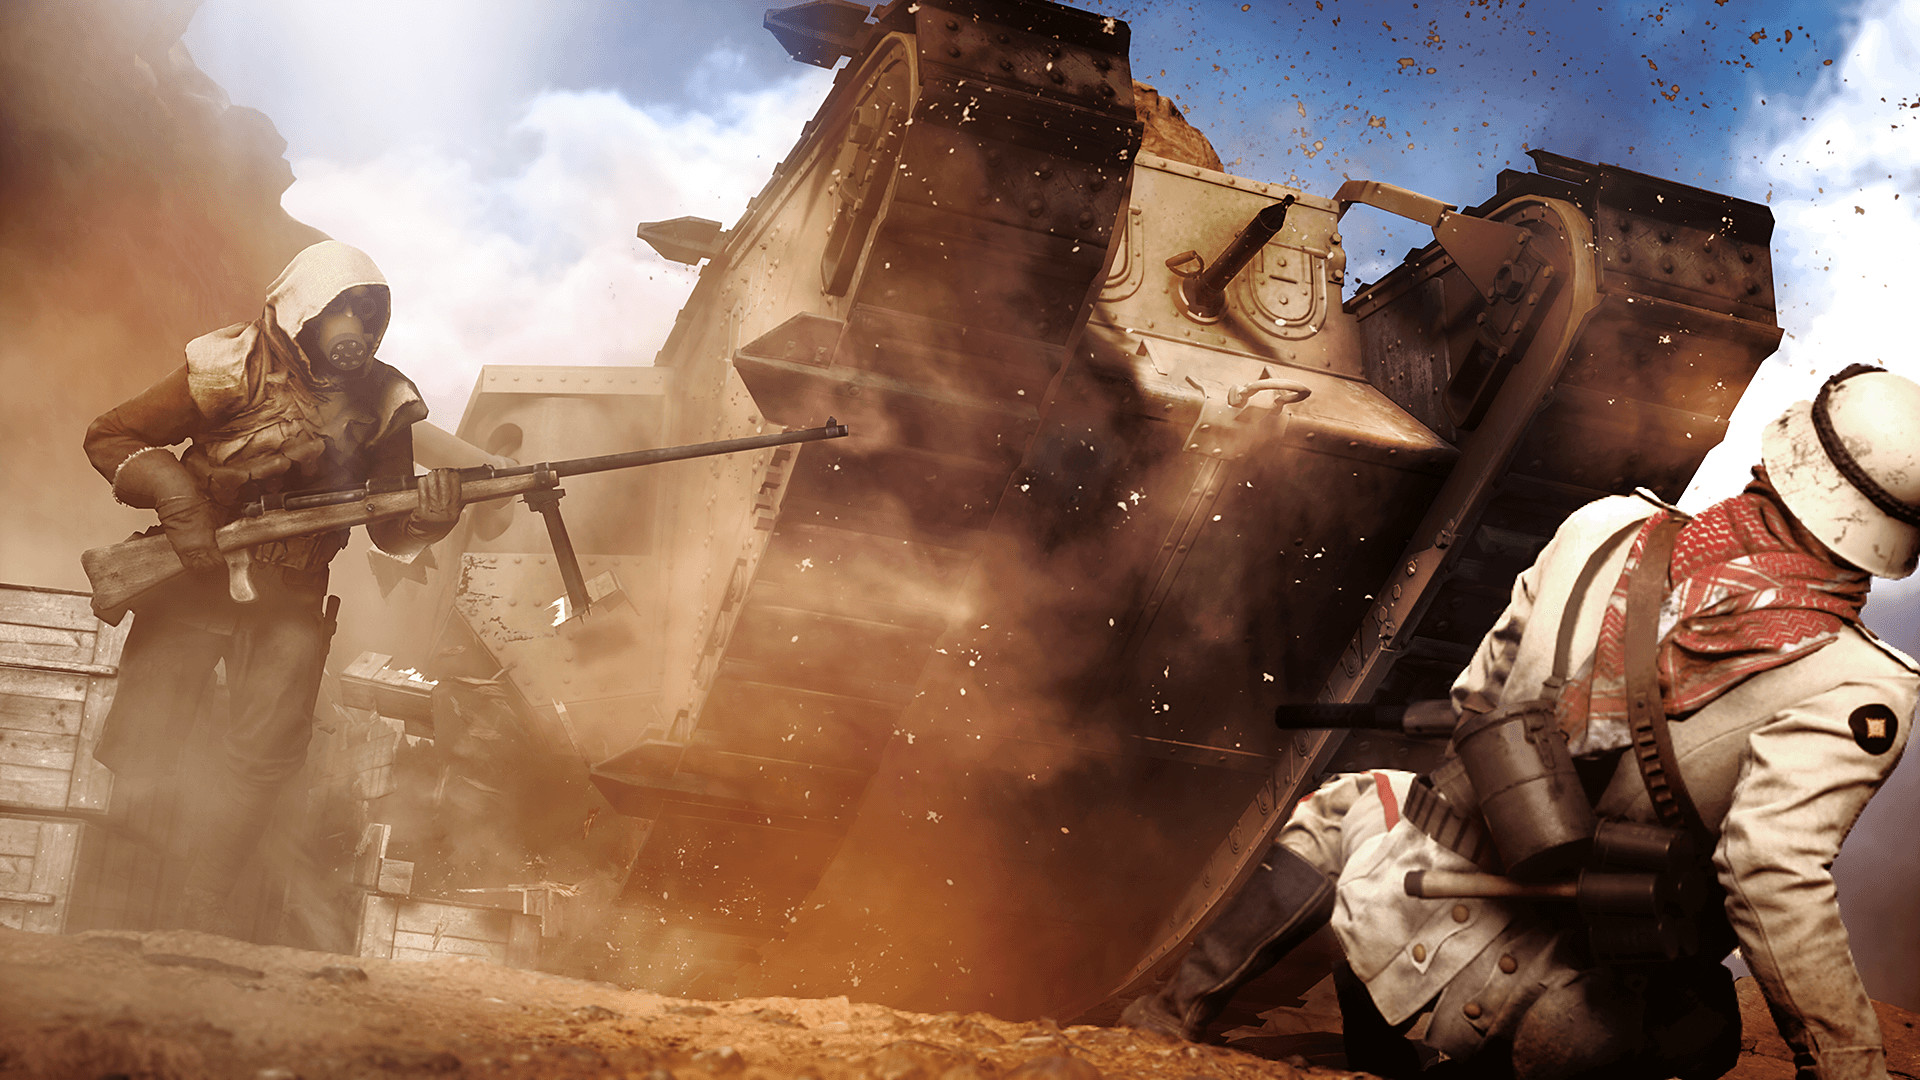 Battlefield 1 Shortcut Kit: Vehicle Bundle on Steam